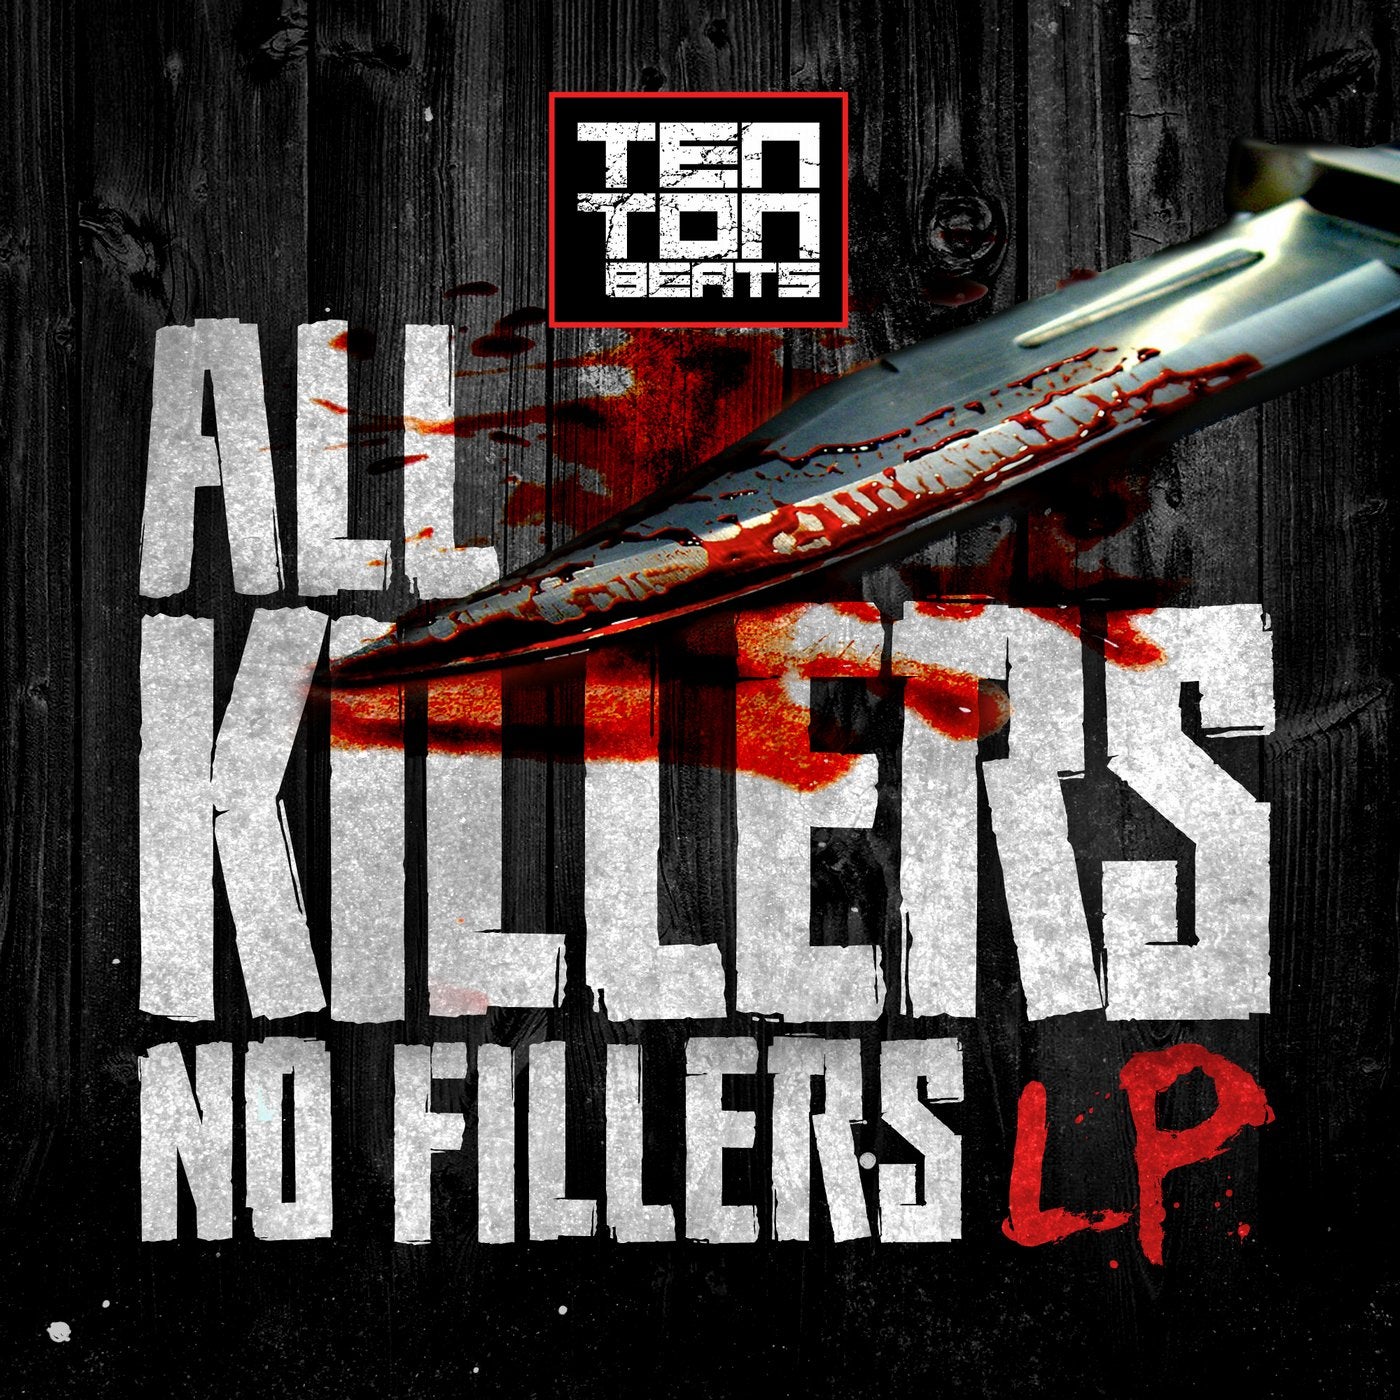 All killers, No fillers LP Volume 3